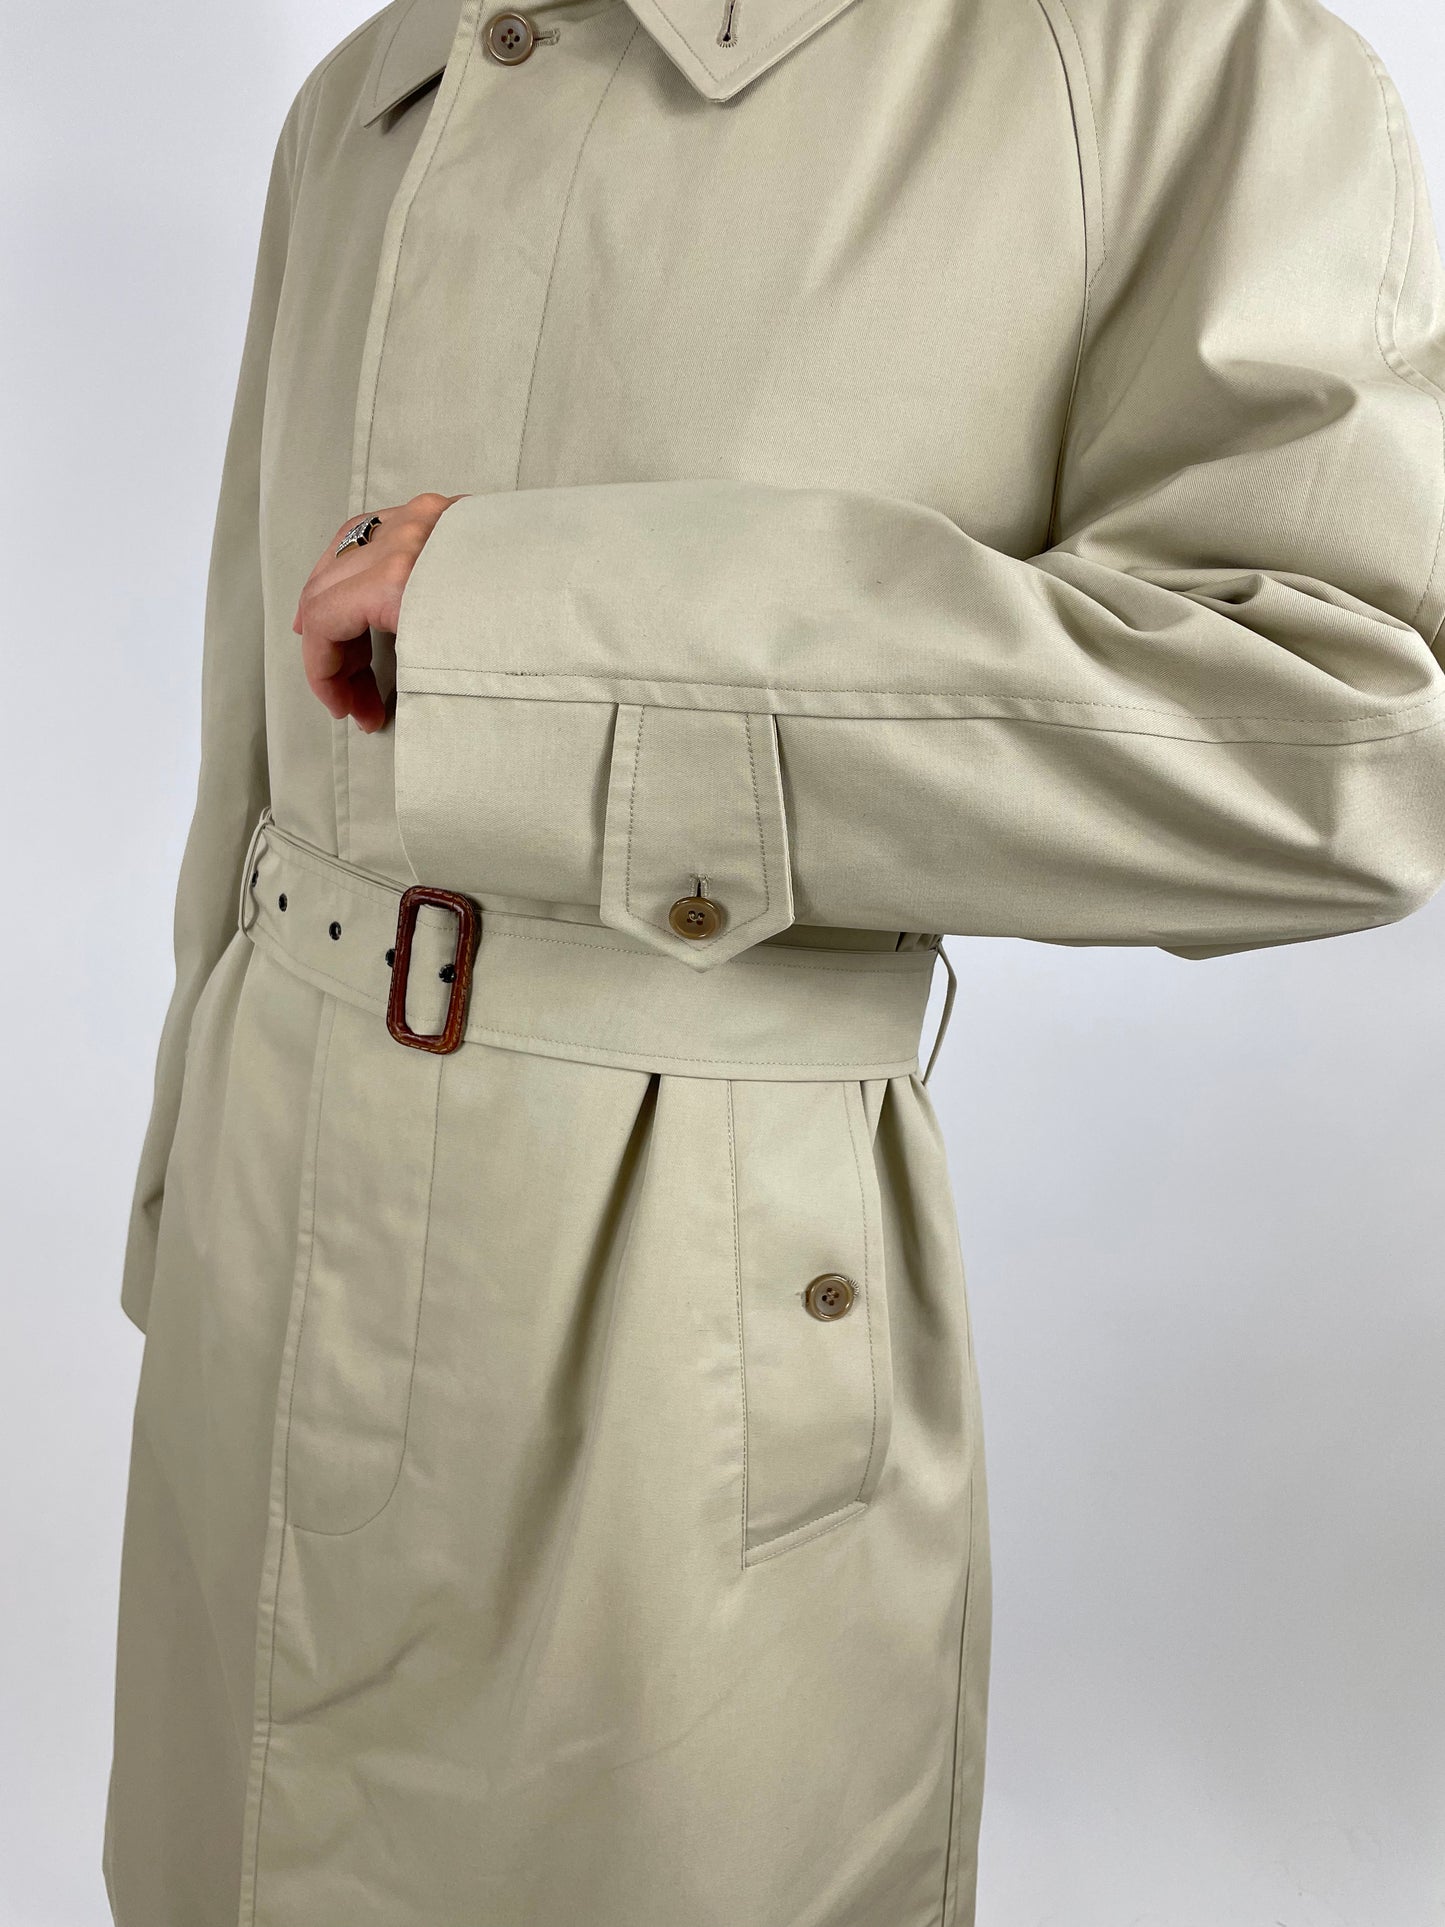 Bertelli's trench coat